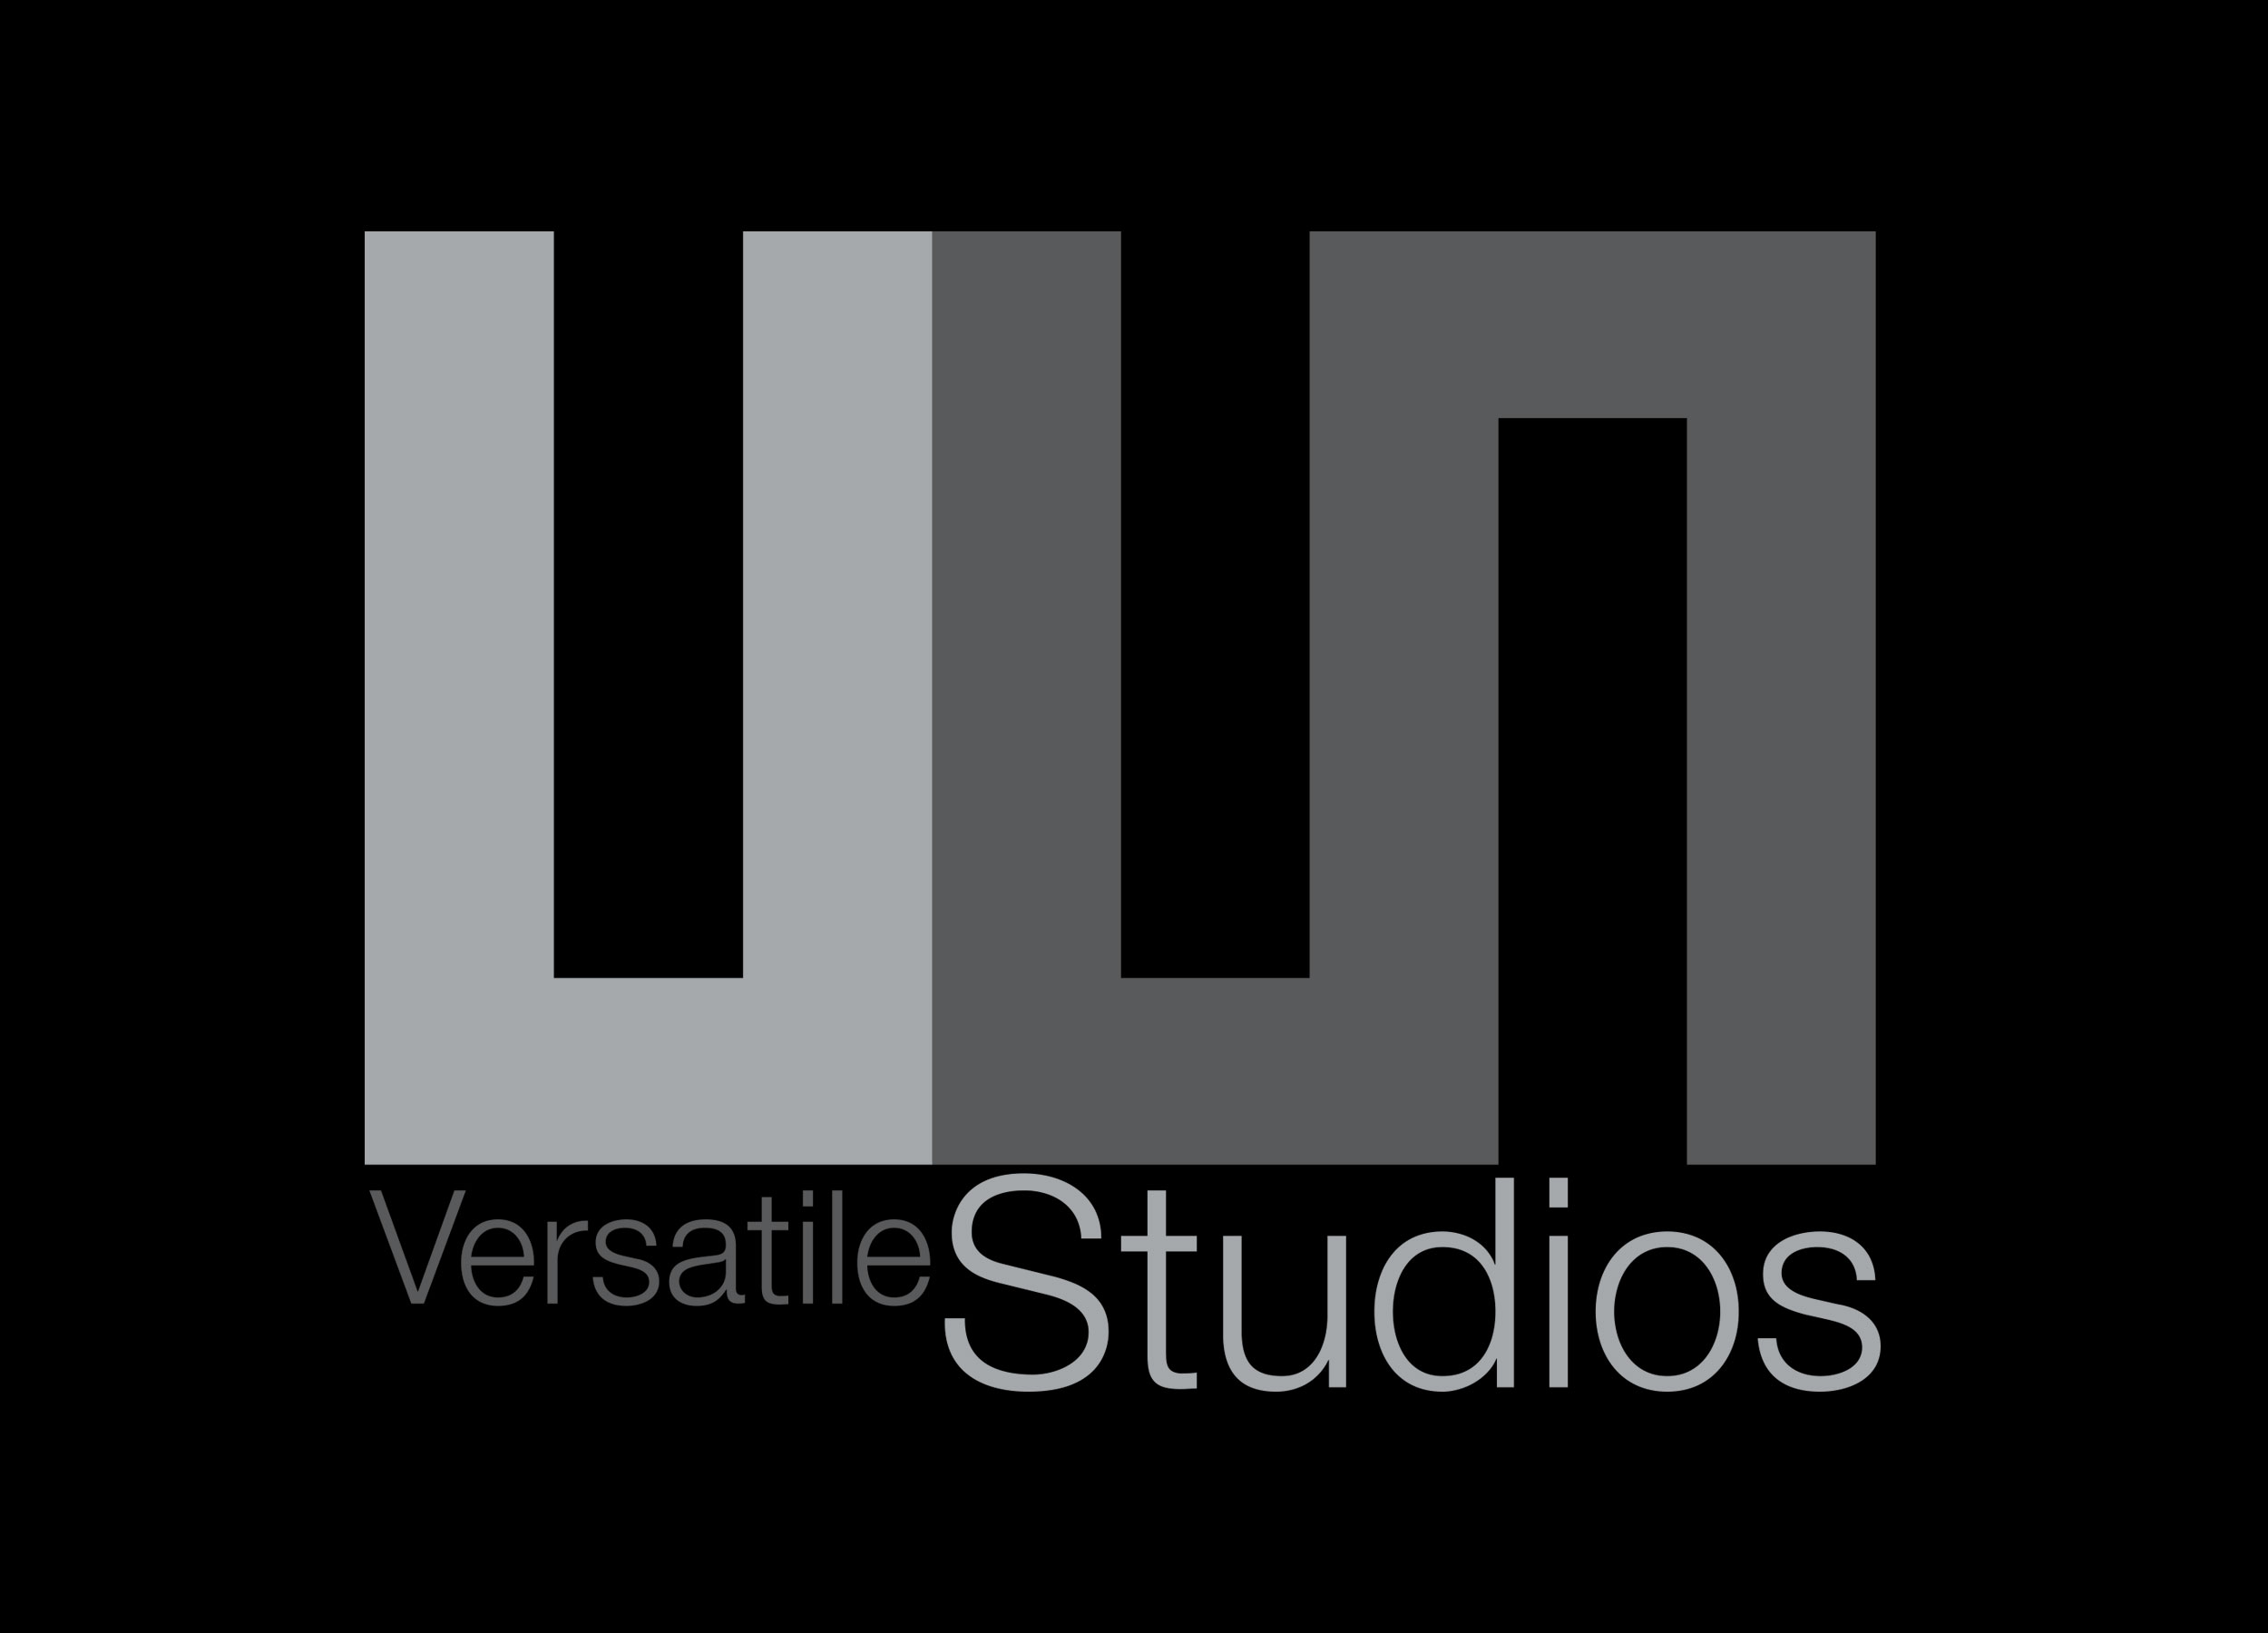 Versatile Studios